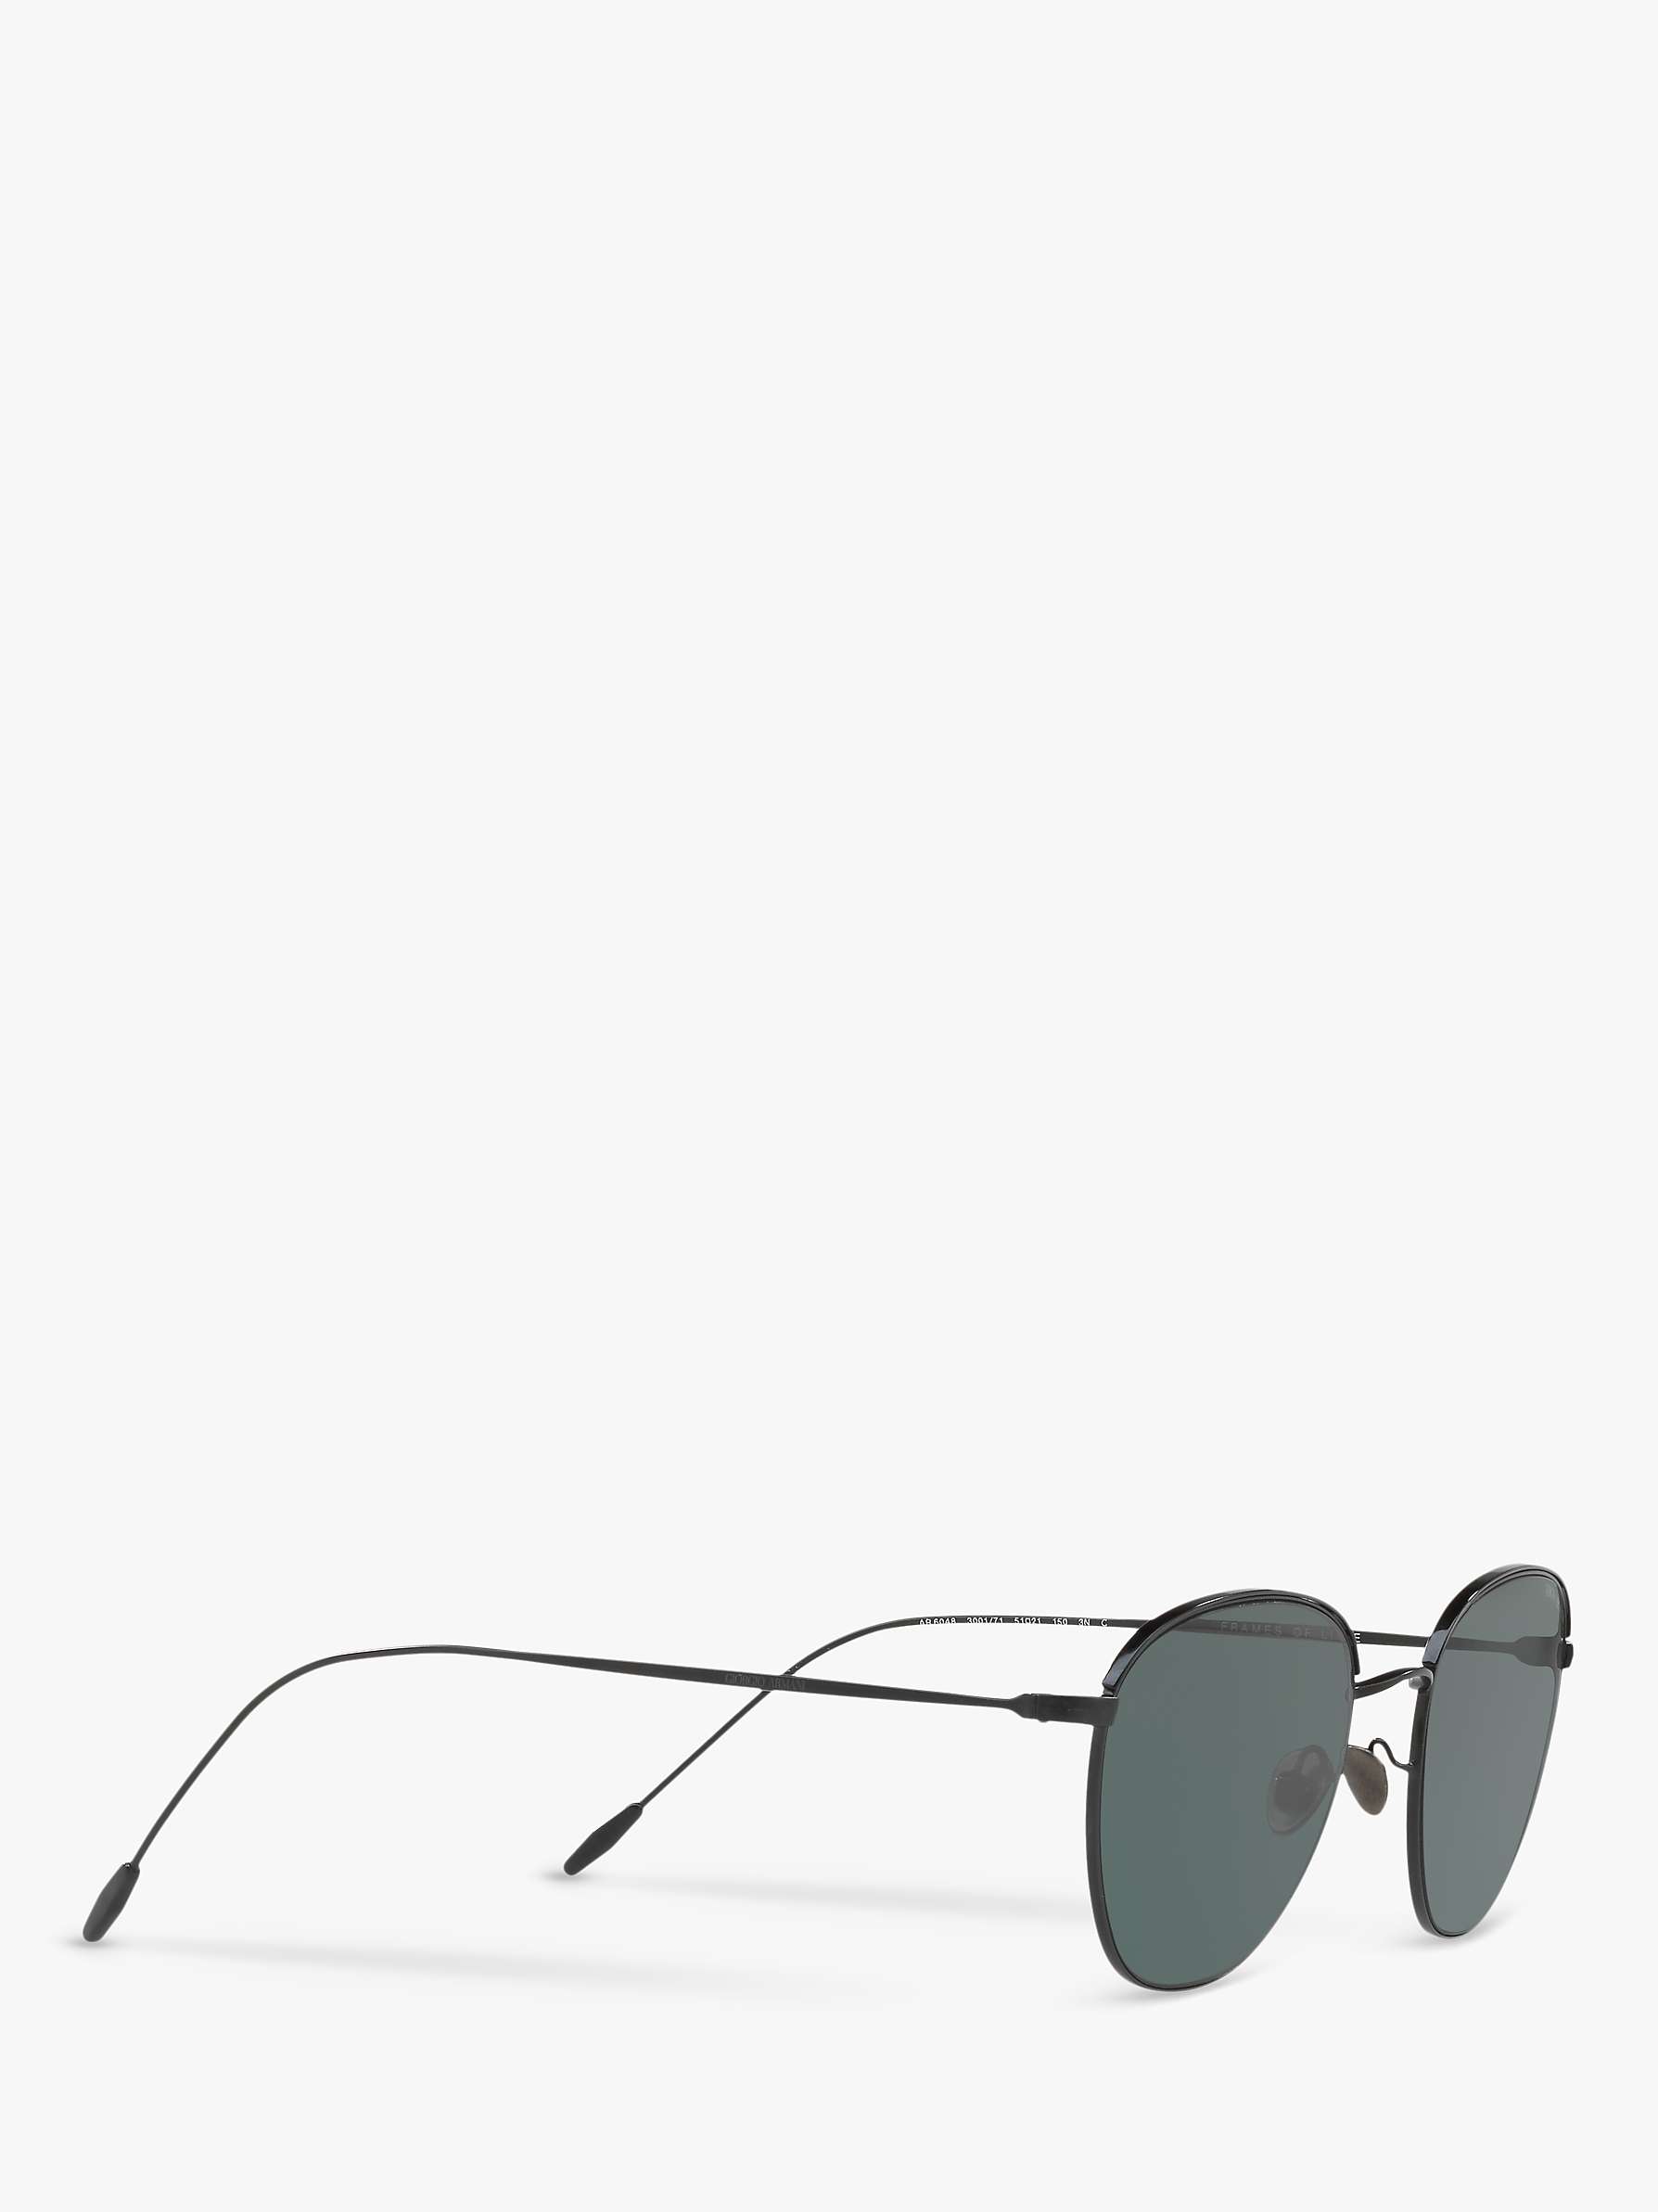 Buy Giorgio Armani AR6048 Men's Oval Sunglasses Online at johnlewis.com